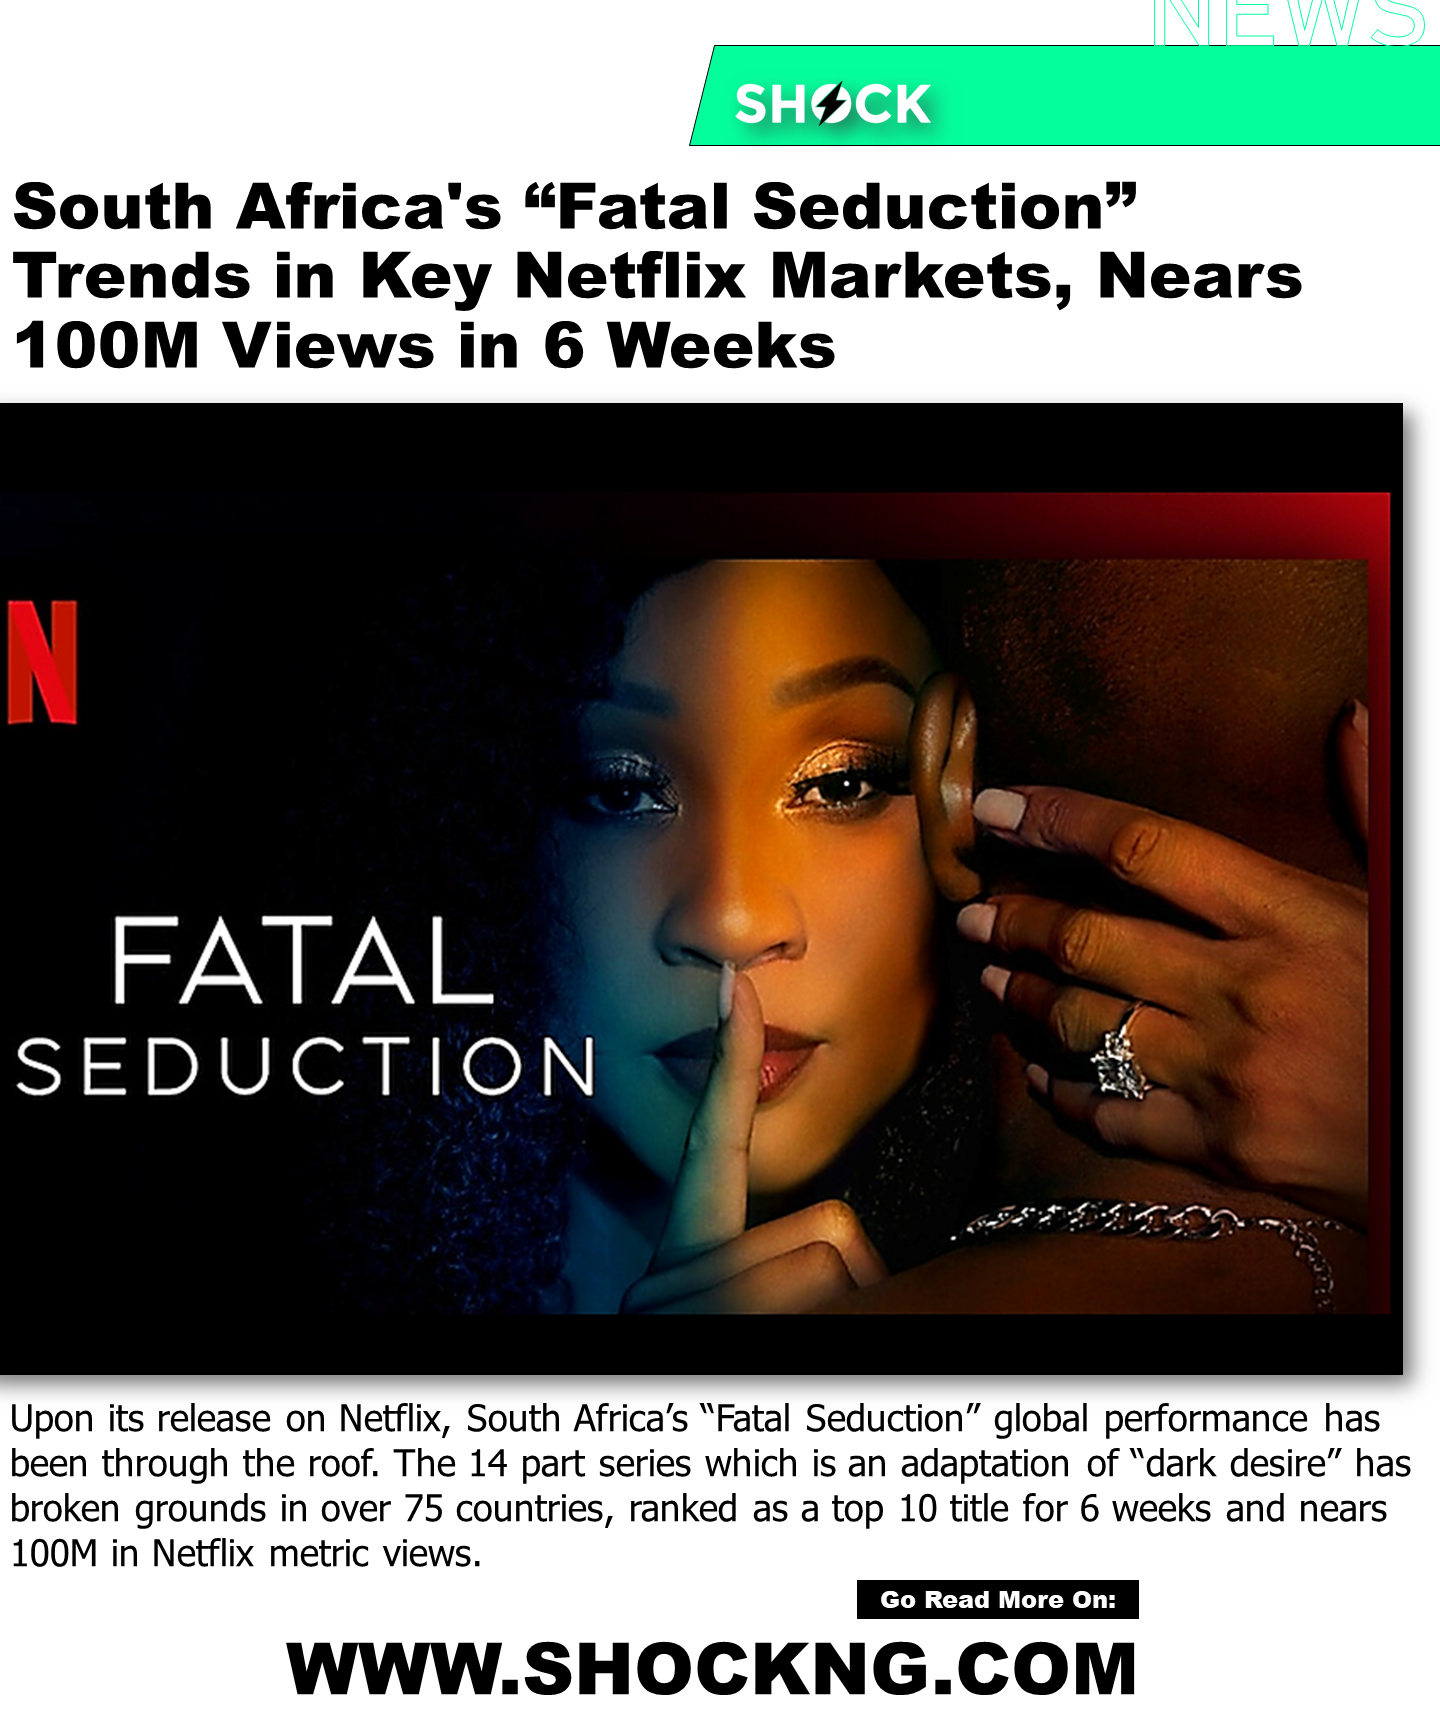 Fatal seduction data - South Africa's “Fatal Seduction” Trends in Key Netflix Markets, Nears 100M Views